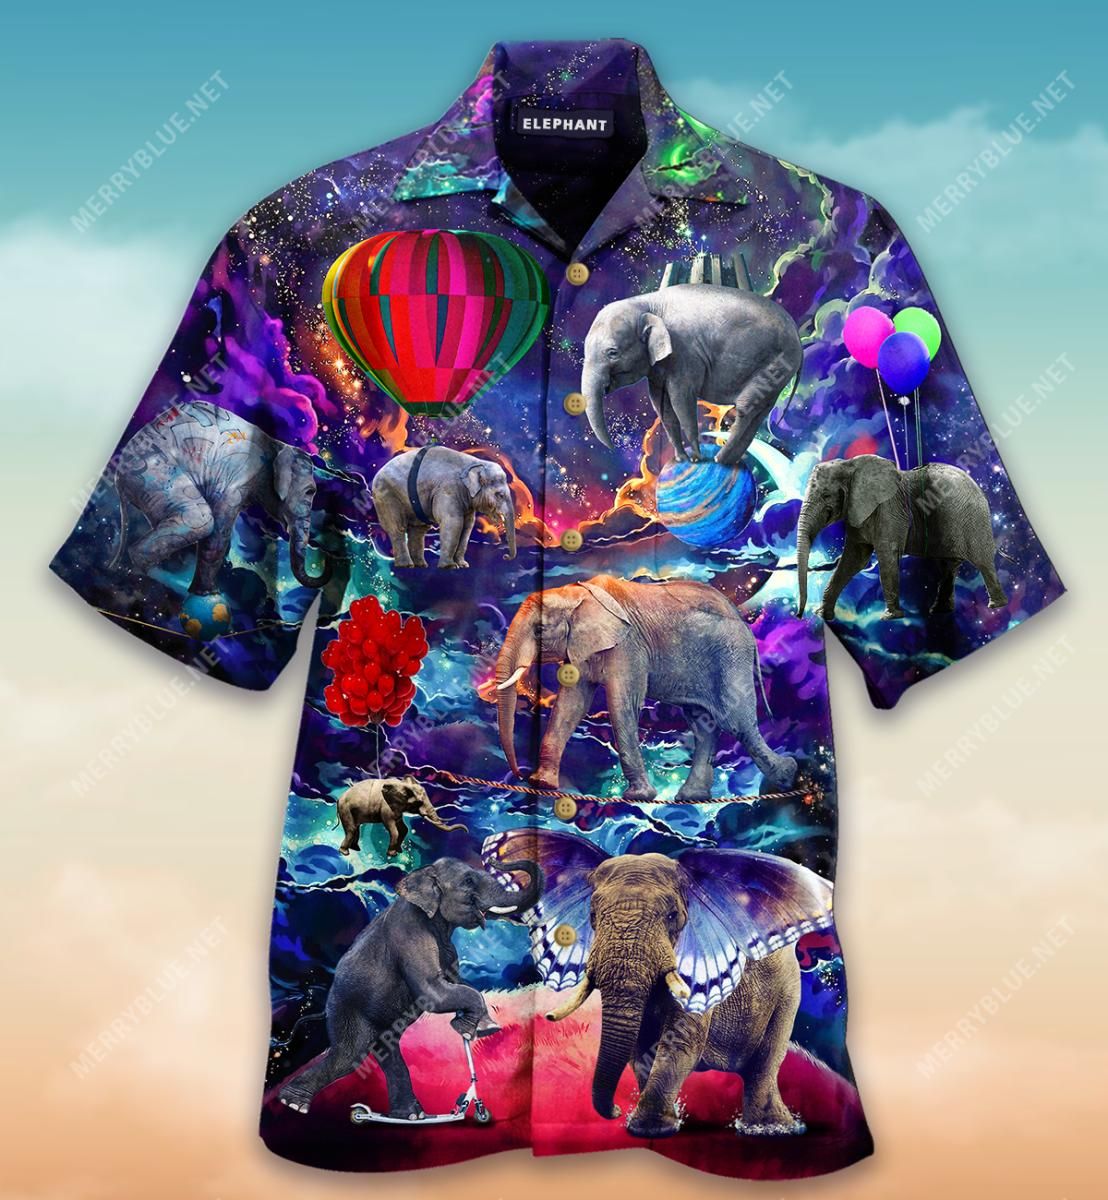 Elephant In Another Galaxy Aloha Hawaiian Shirt Colorful Short Sleeve Summer Beach Casual Shirt For Men And Women